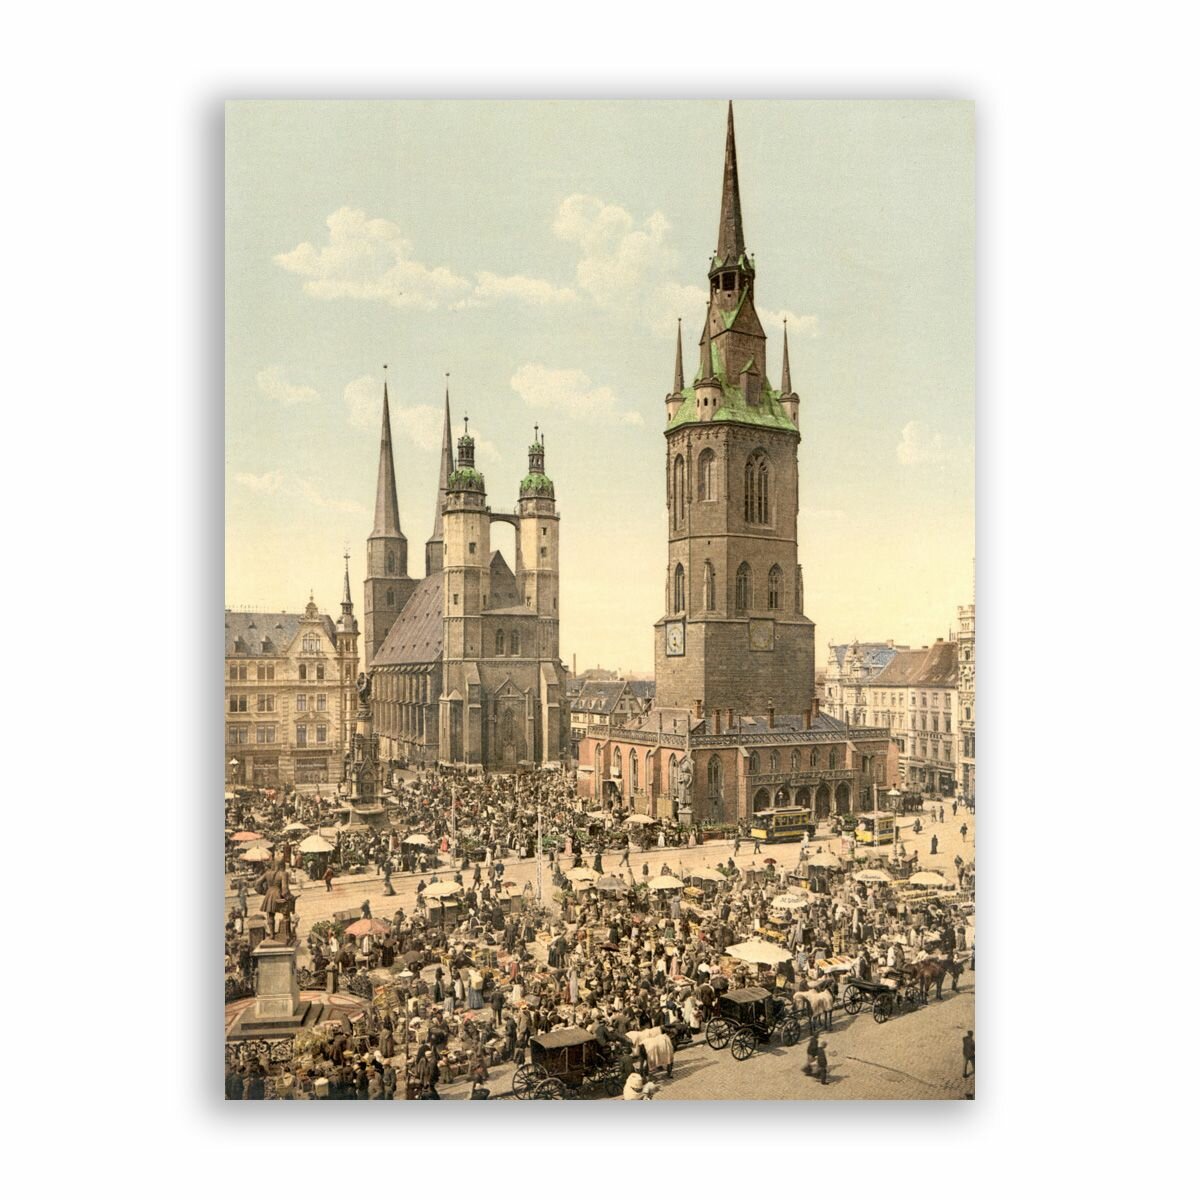 Постер, плакат на бумаге / The market place, Halle, German Saxony, Germany / Размер 30 x 40 см